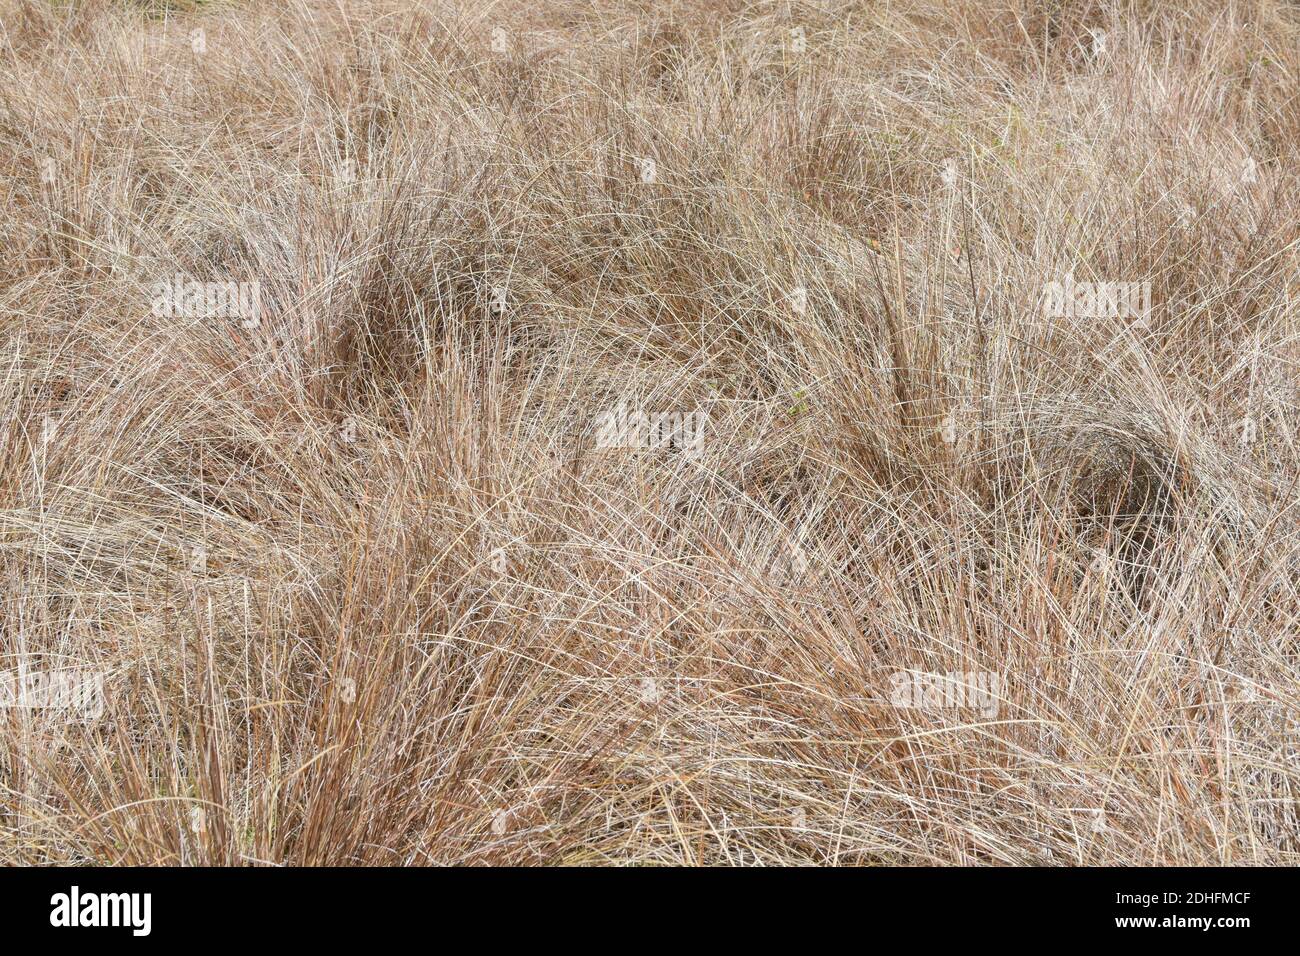 View of New Zealand Hair Sedge (Carex Buchananii) Stock Photo